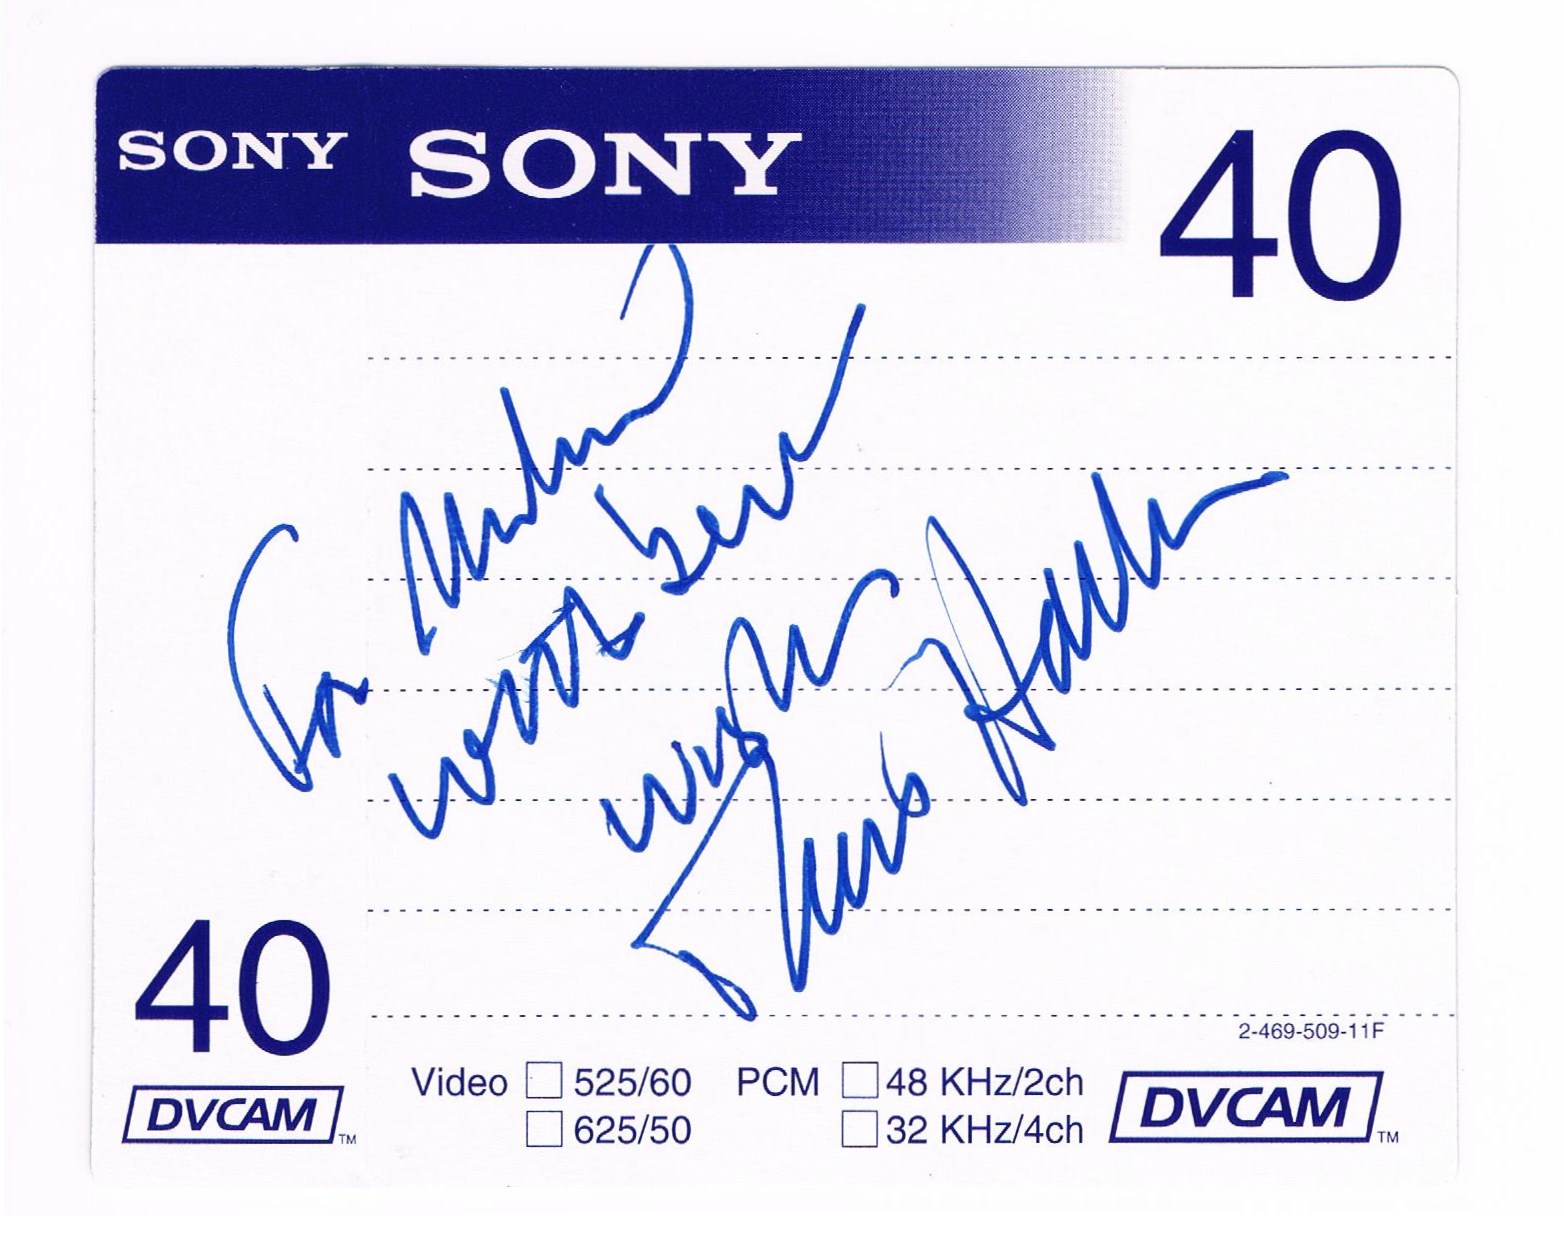 Blue ink autograph of David Halberstam on a VHS videotape label